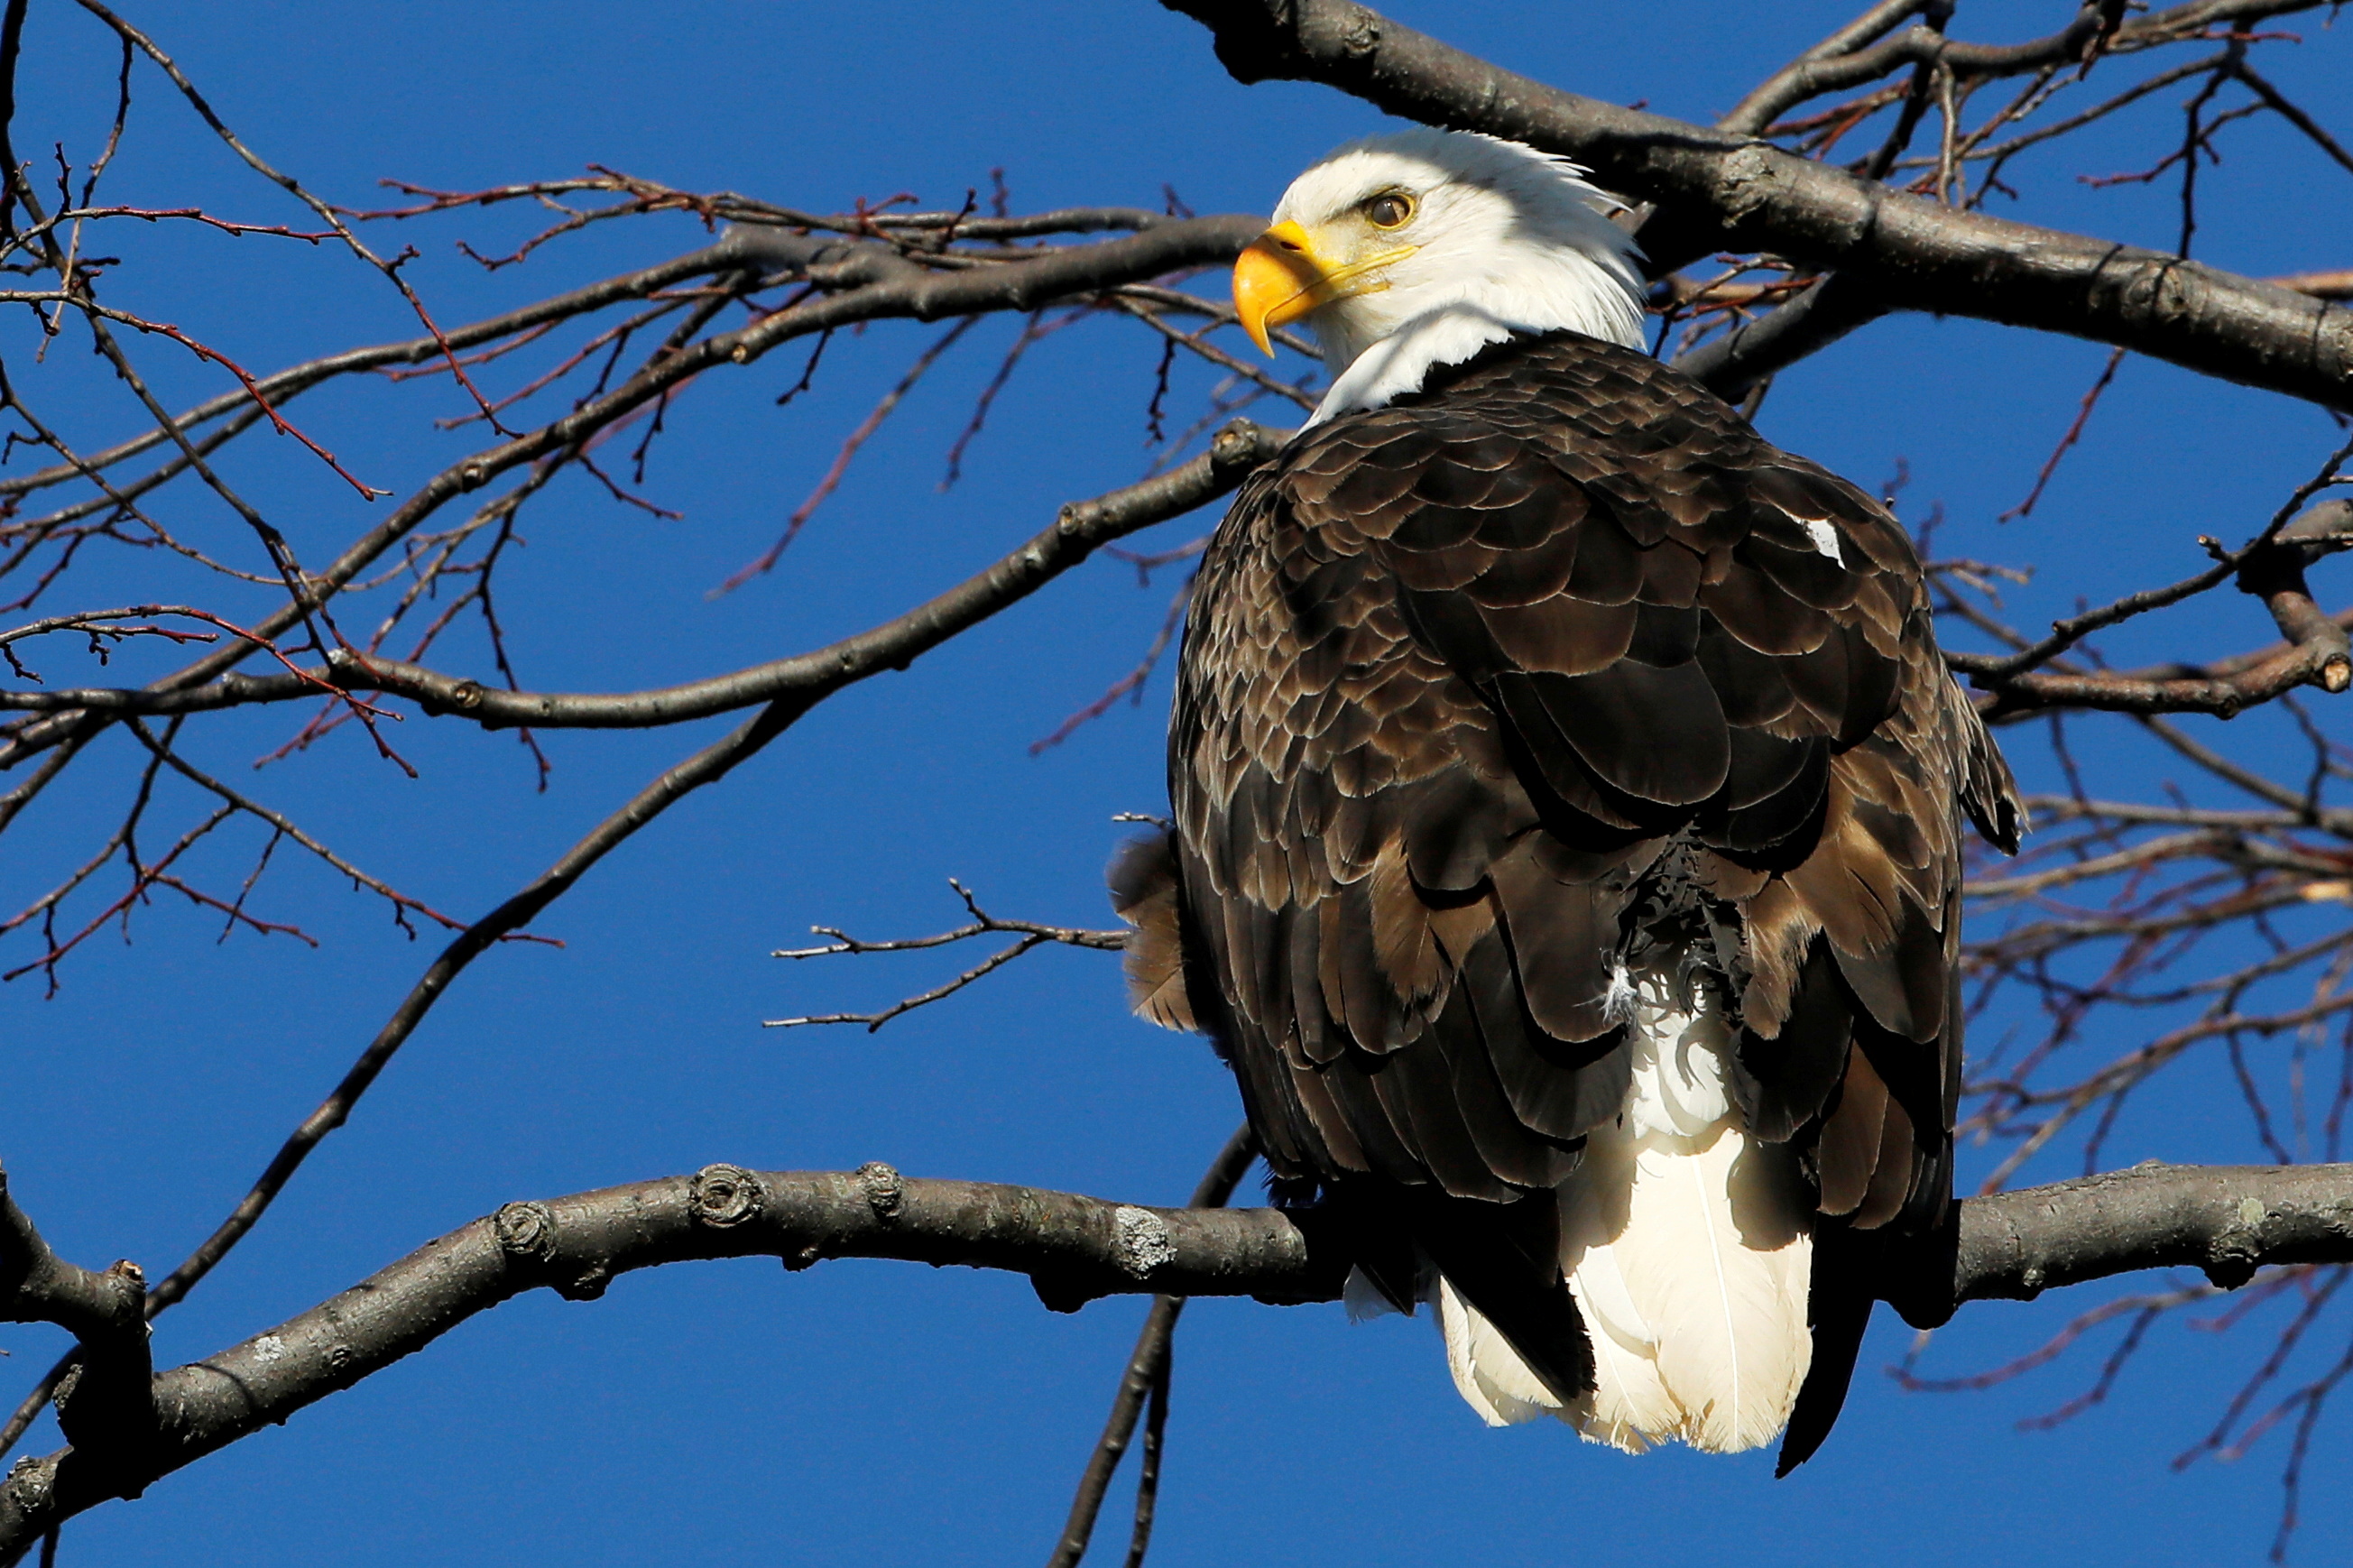 U.S. moves to restore endangered species protections weakened under